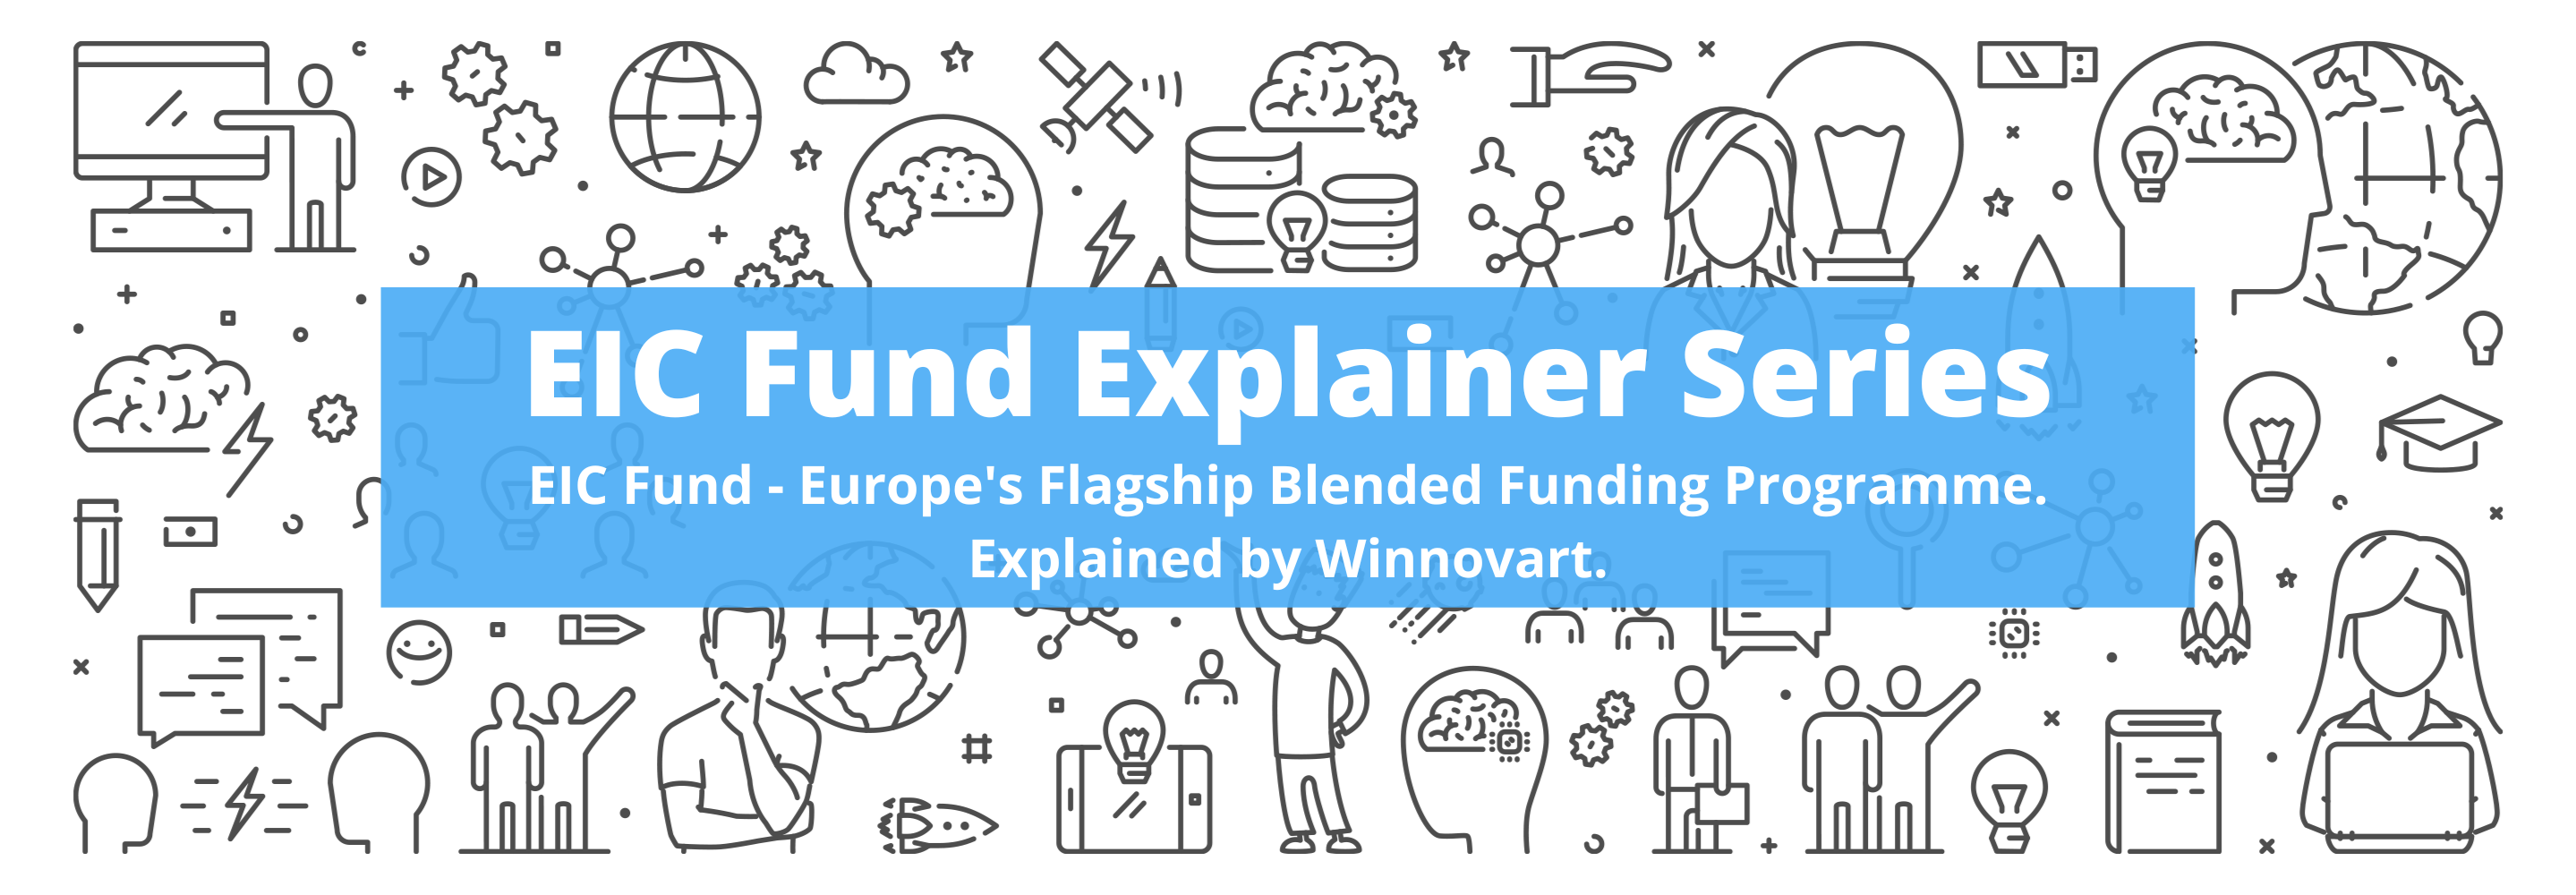 EIC Fund - Explainer Series Banner (Explained by Winnovart)